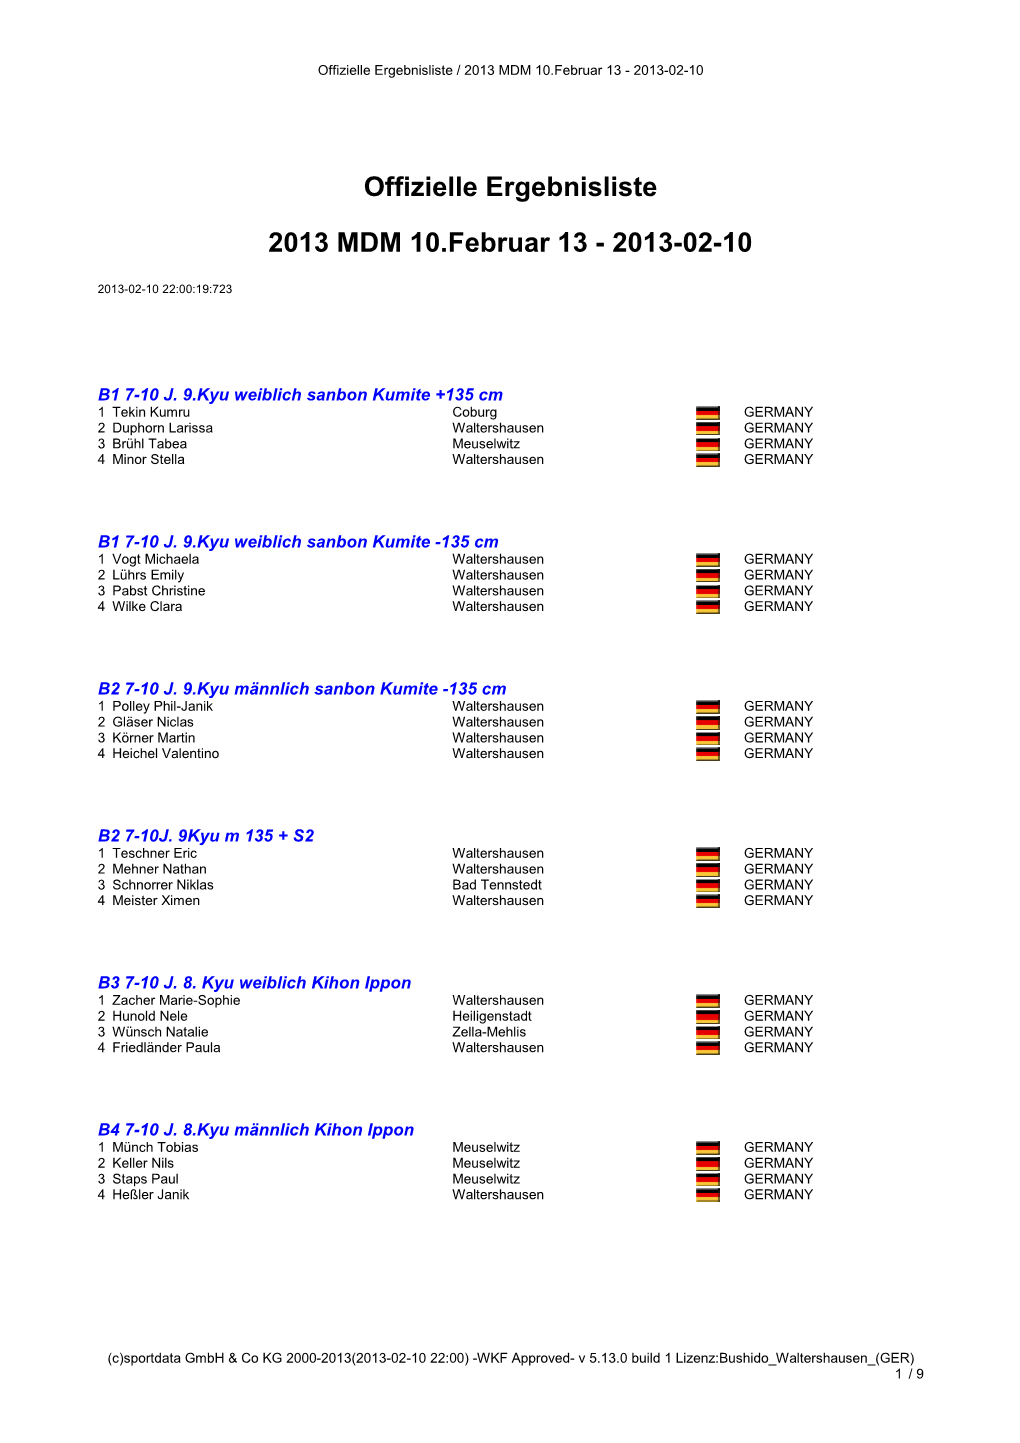 Offizielle Ergebnisliste 2013 MDM 10.Februar 13